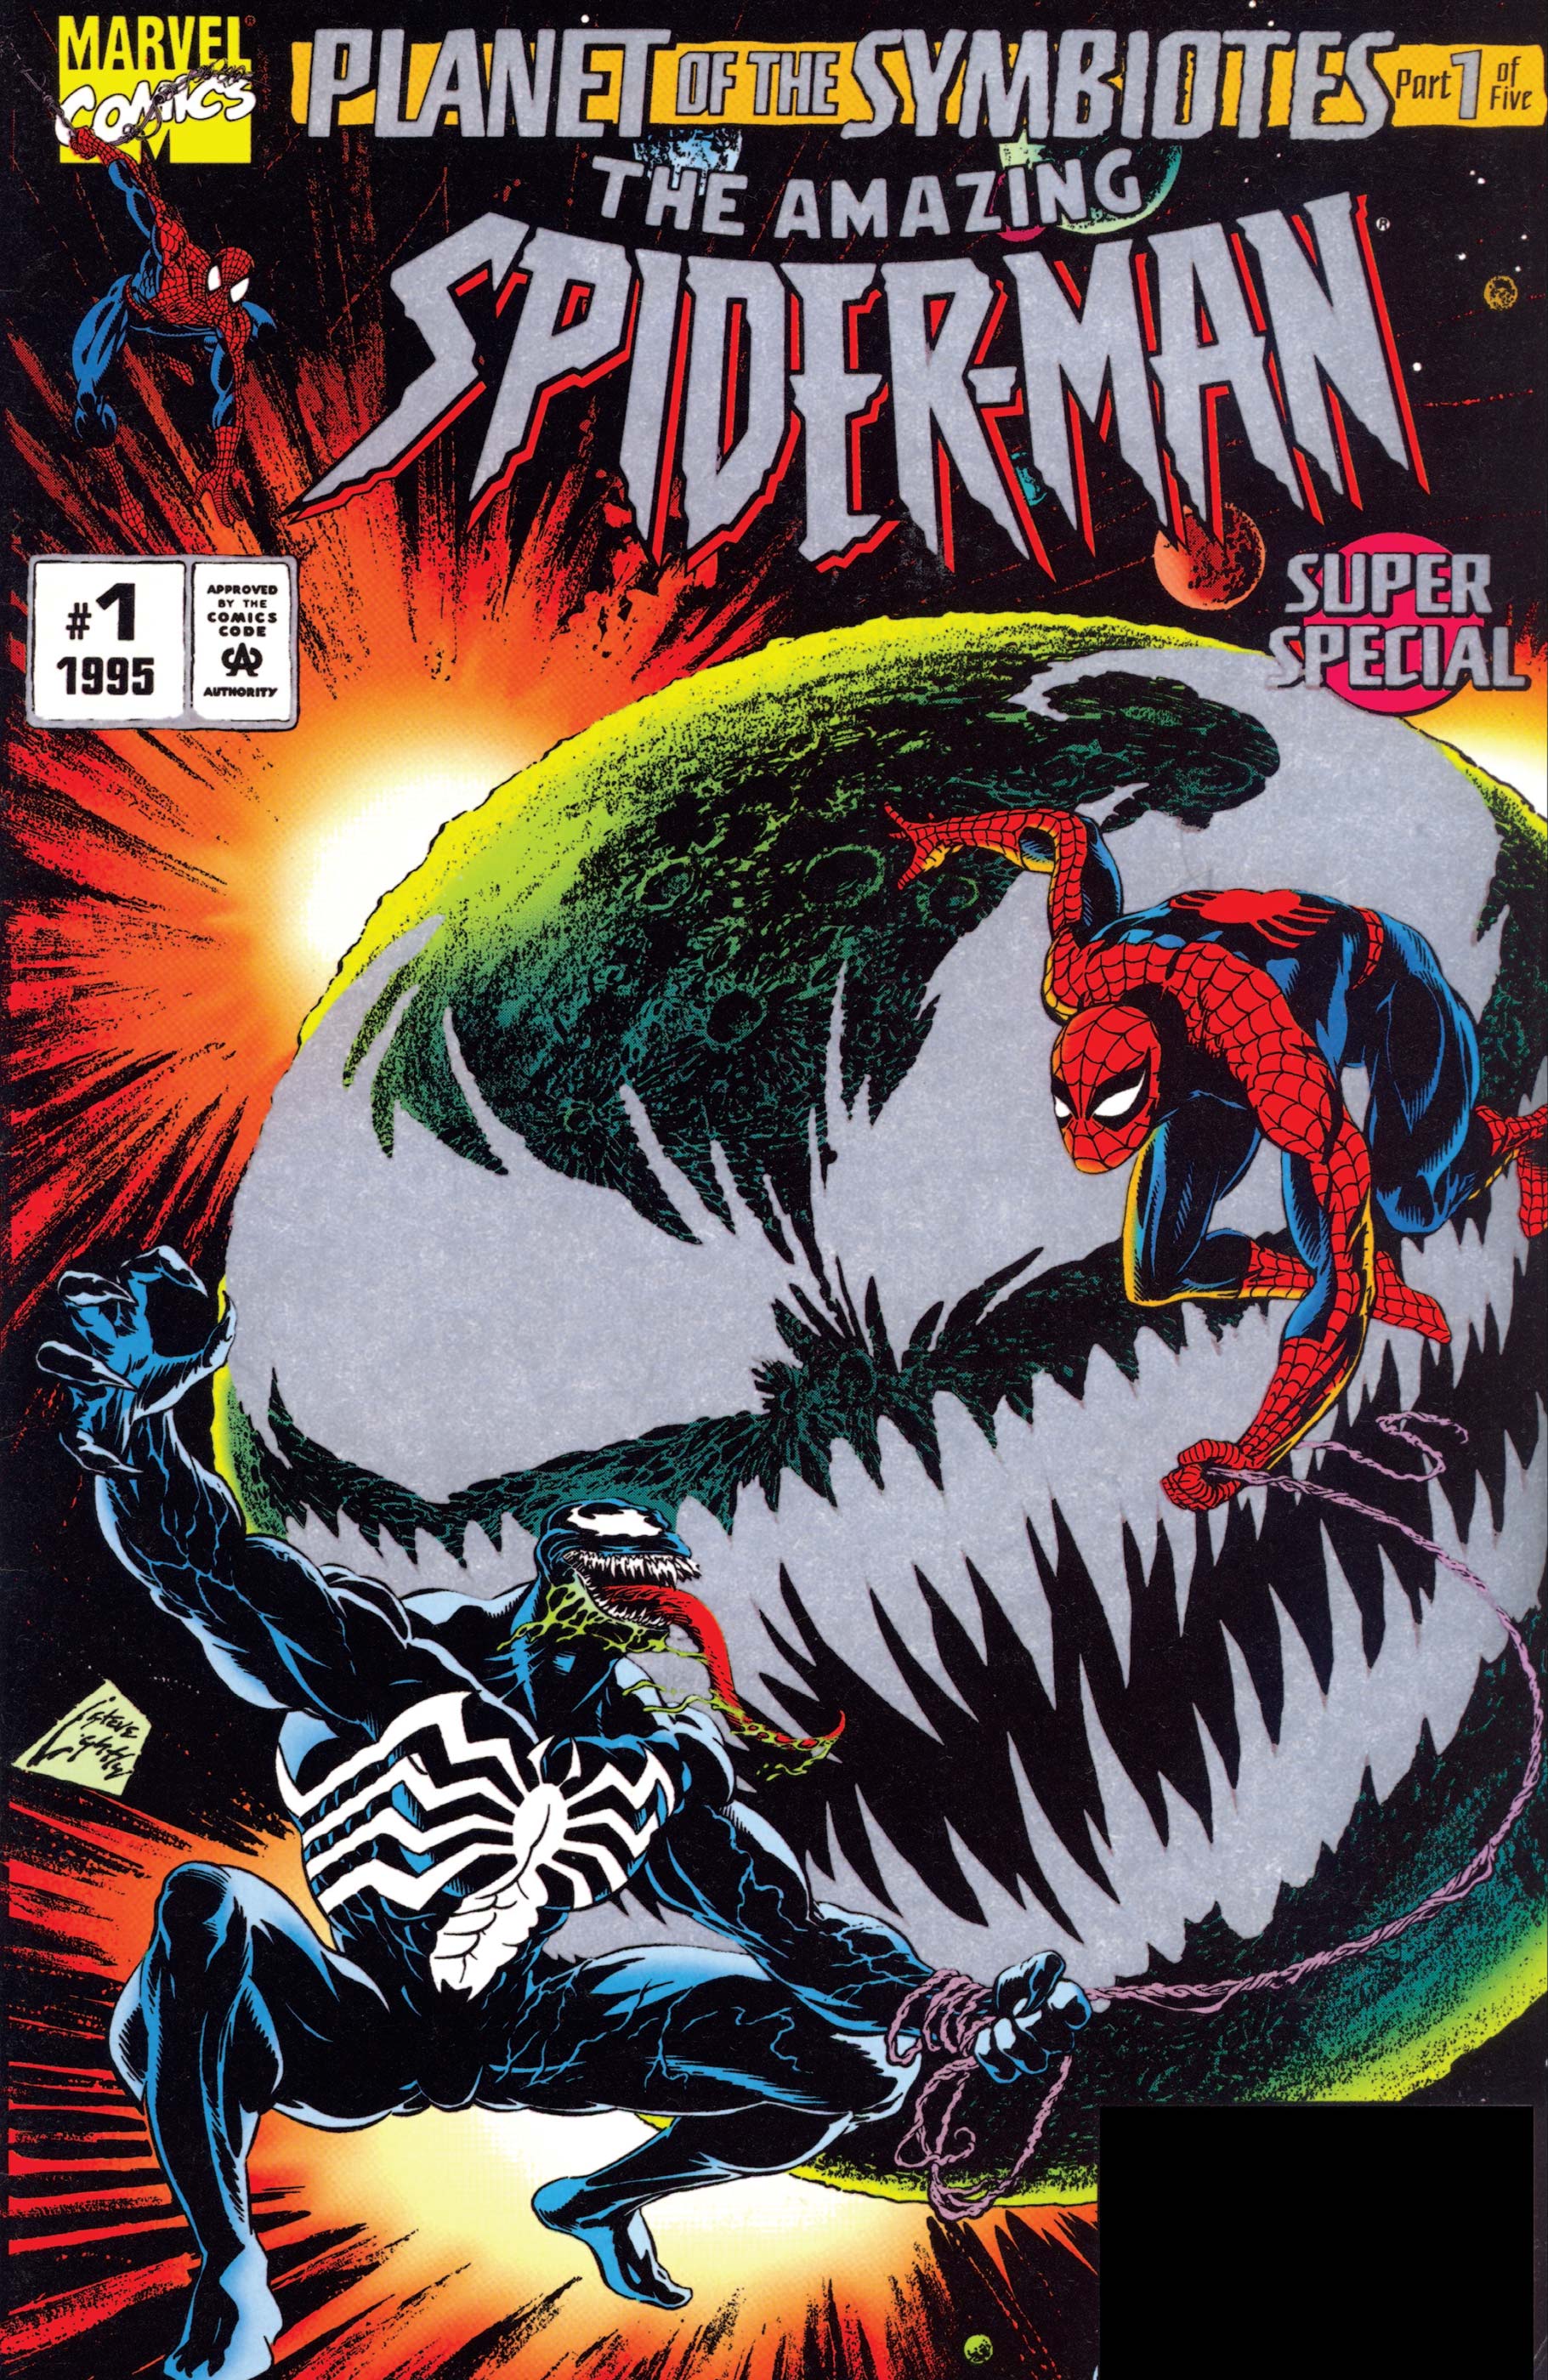 Amazing Spider-Man Super Special (1995) #1